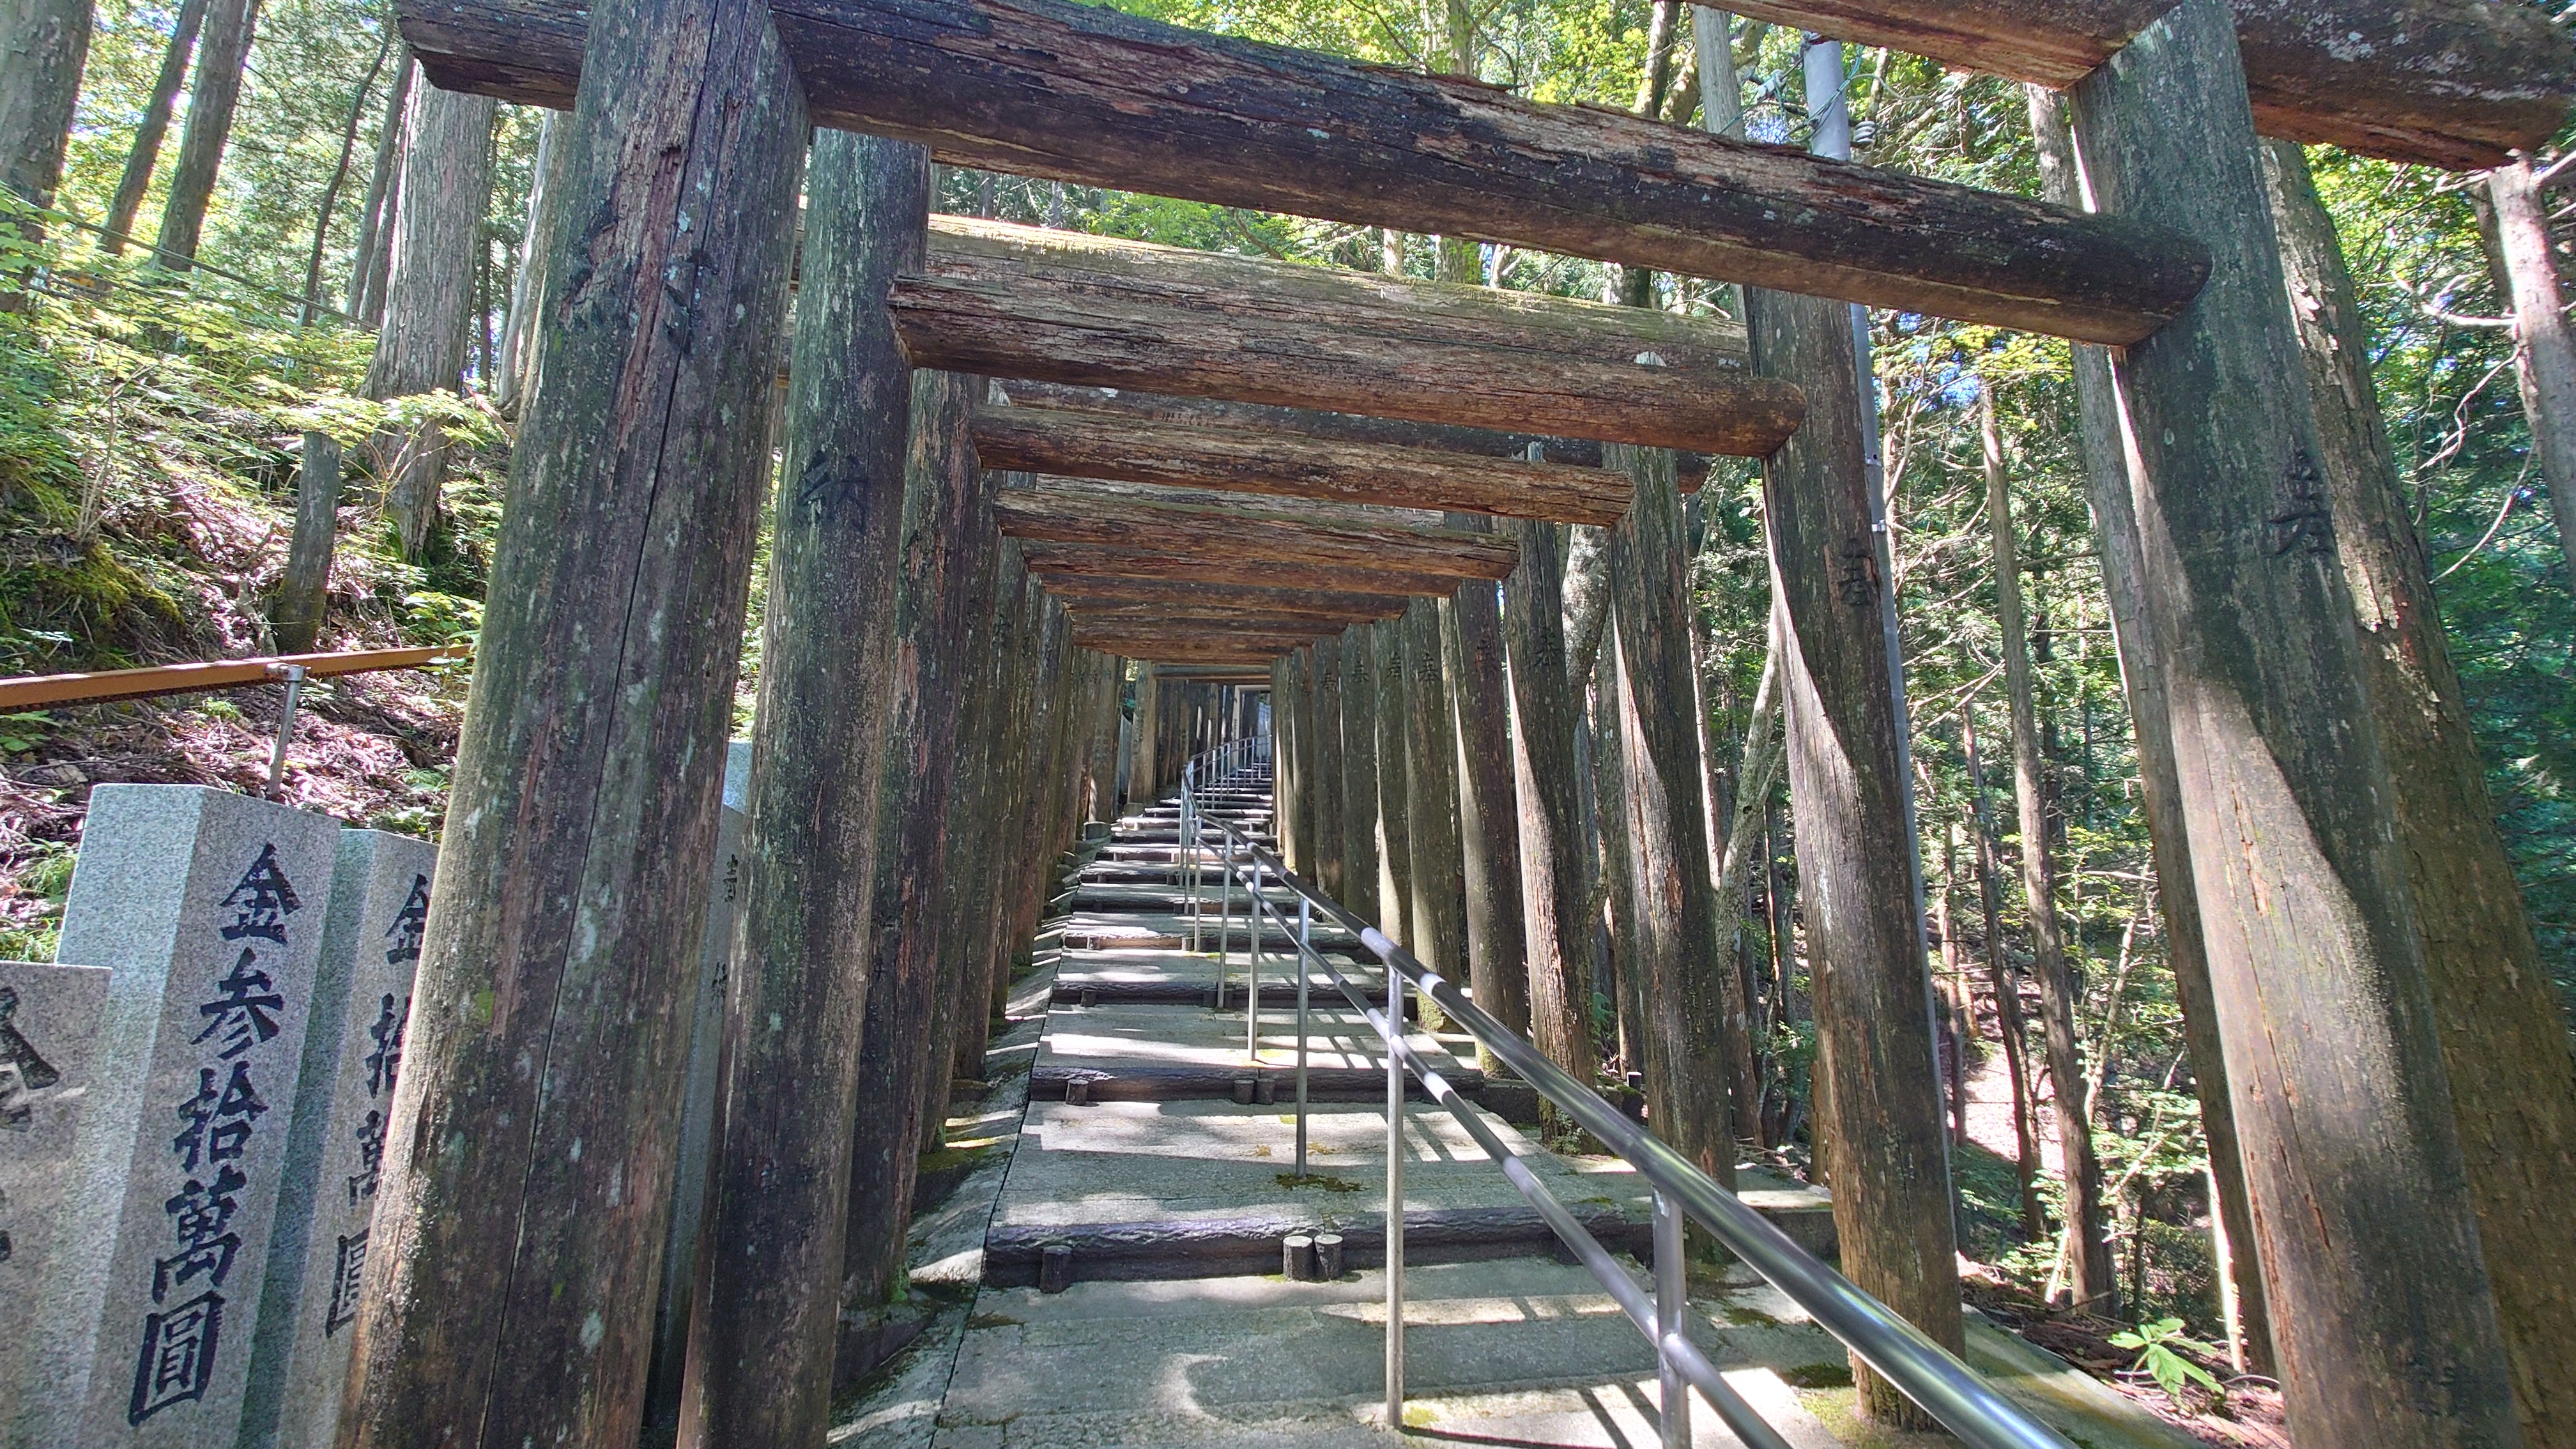 Tateriko Shrine, which related deeply to Mt. Koya